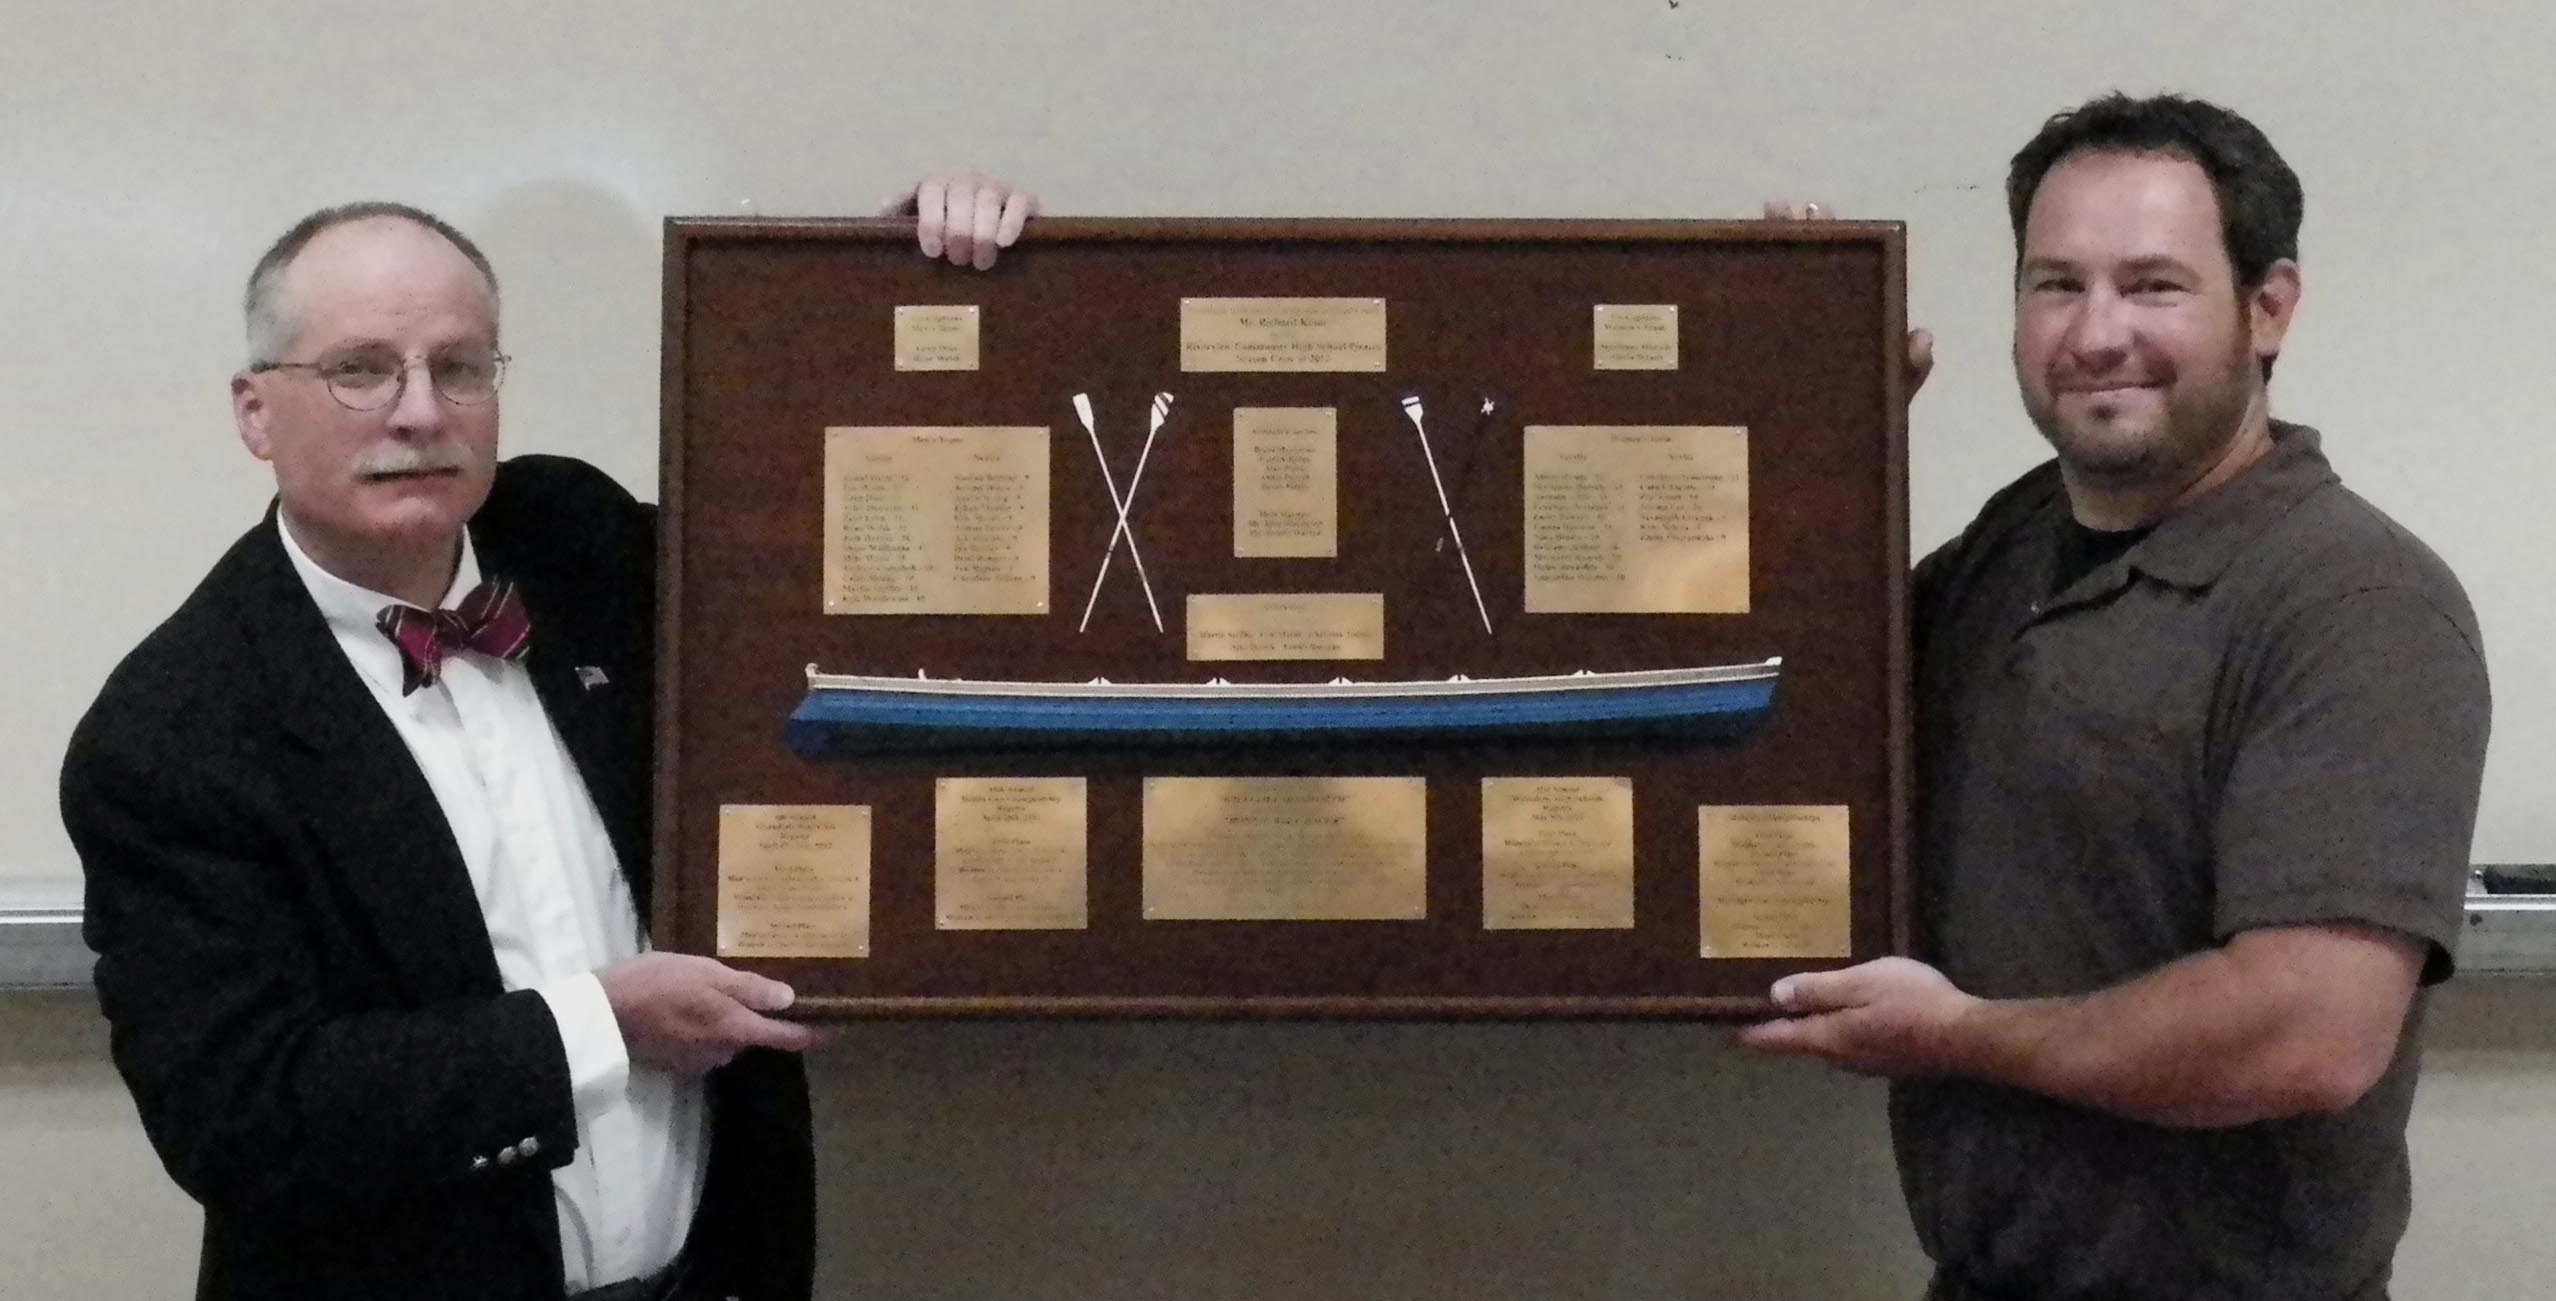 Presentation of the half hull award to coach Richard Kesor